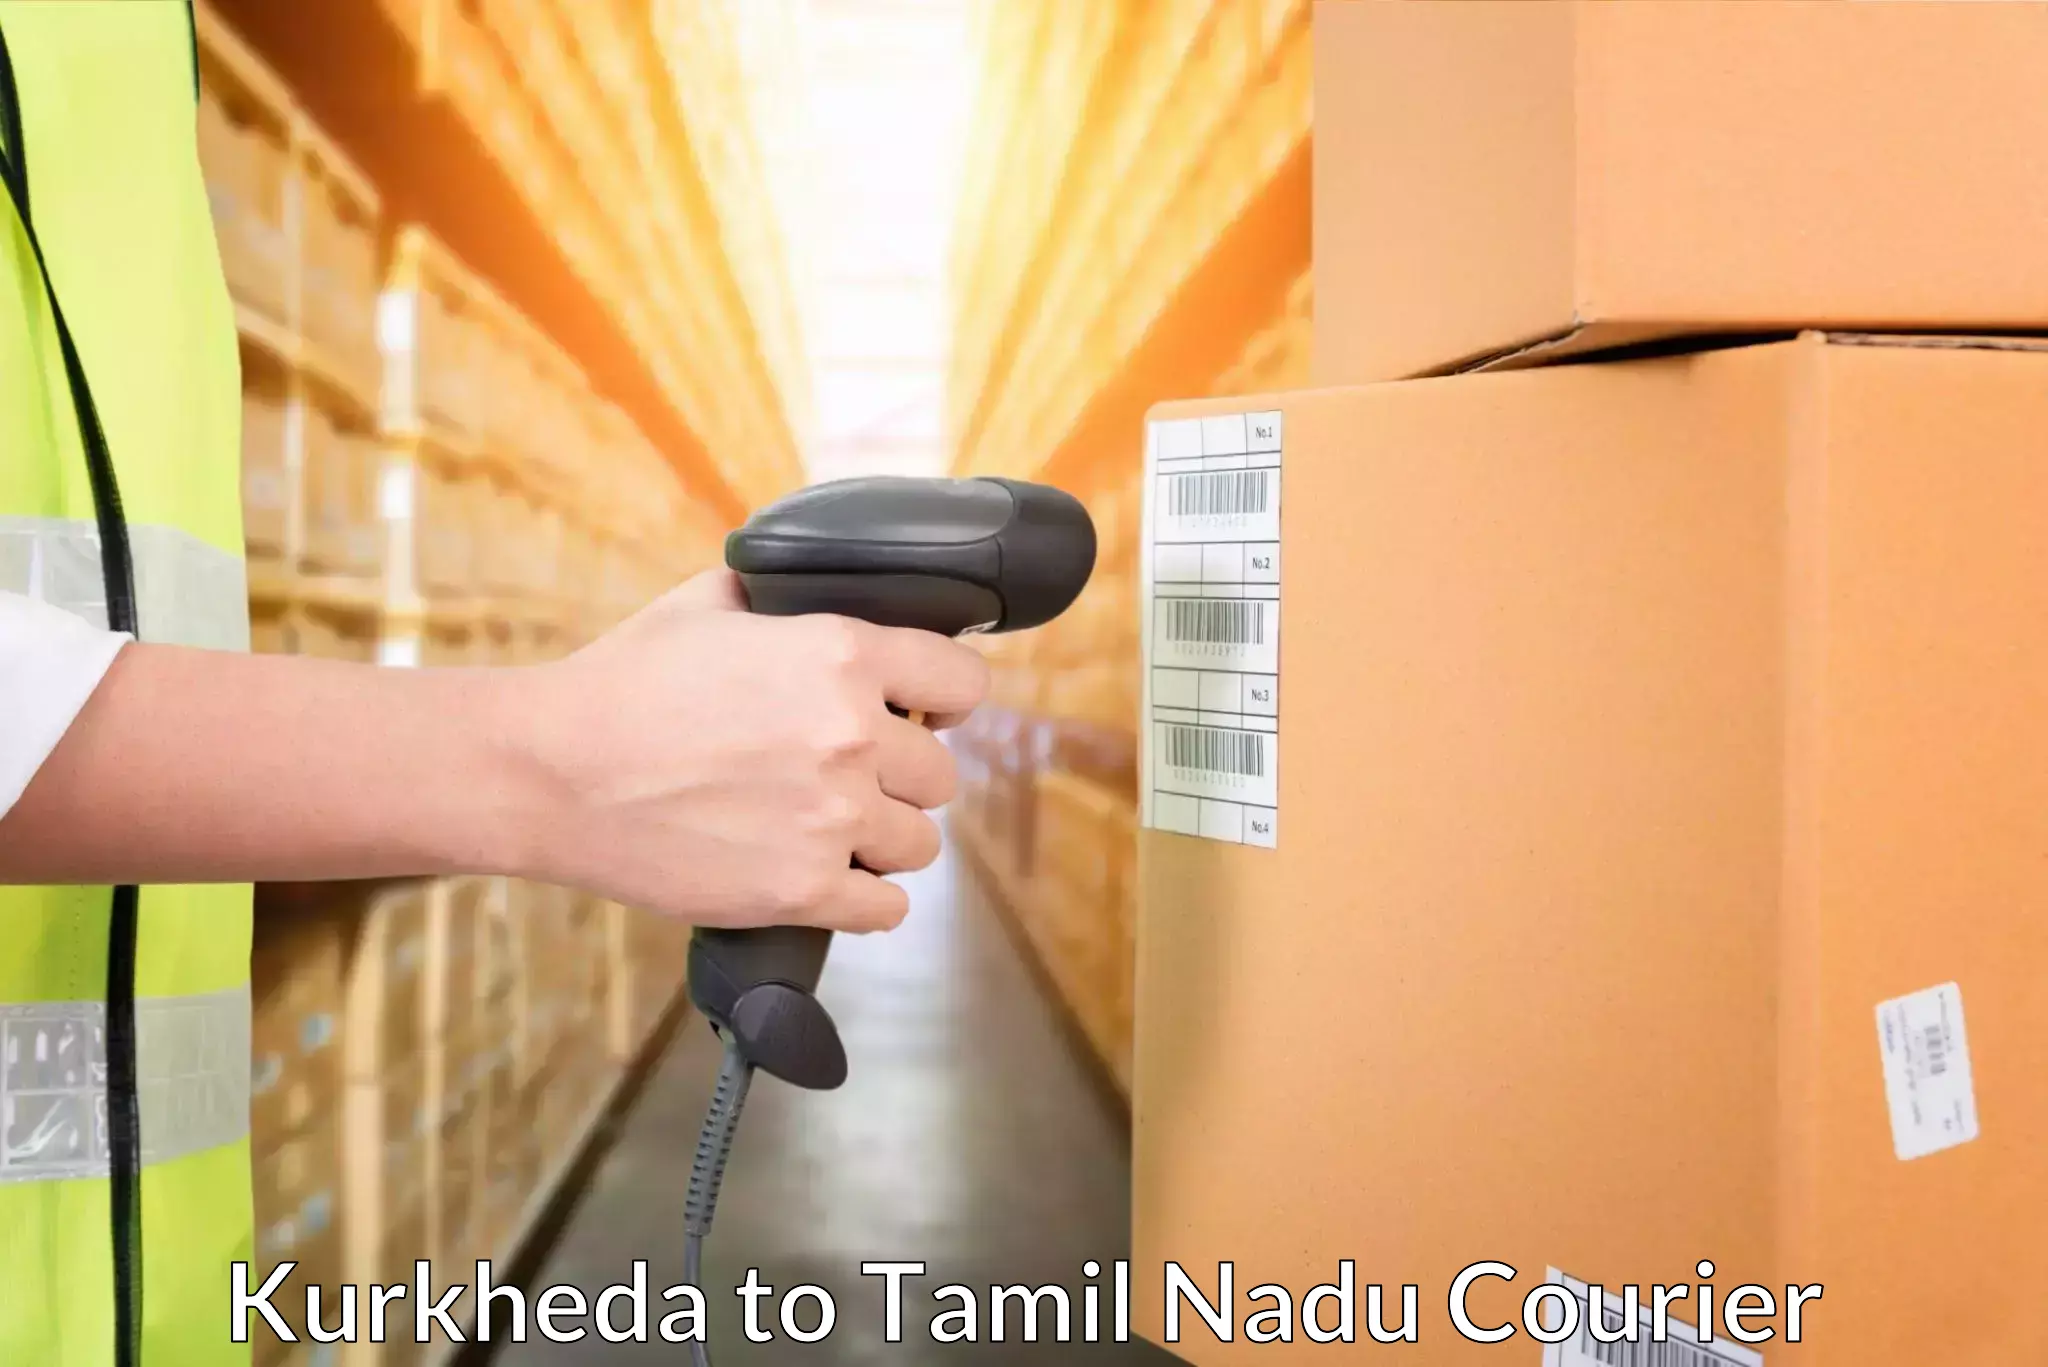 User-friendly delivery service Kurkheda to Thiruvadanai